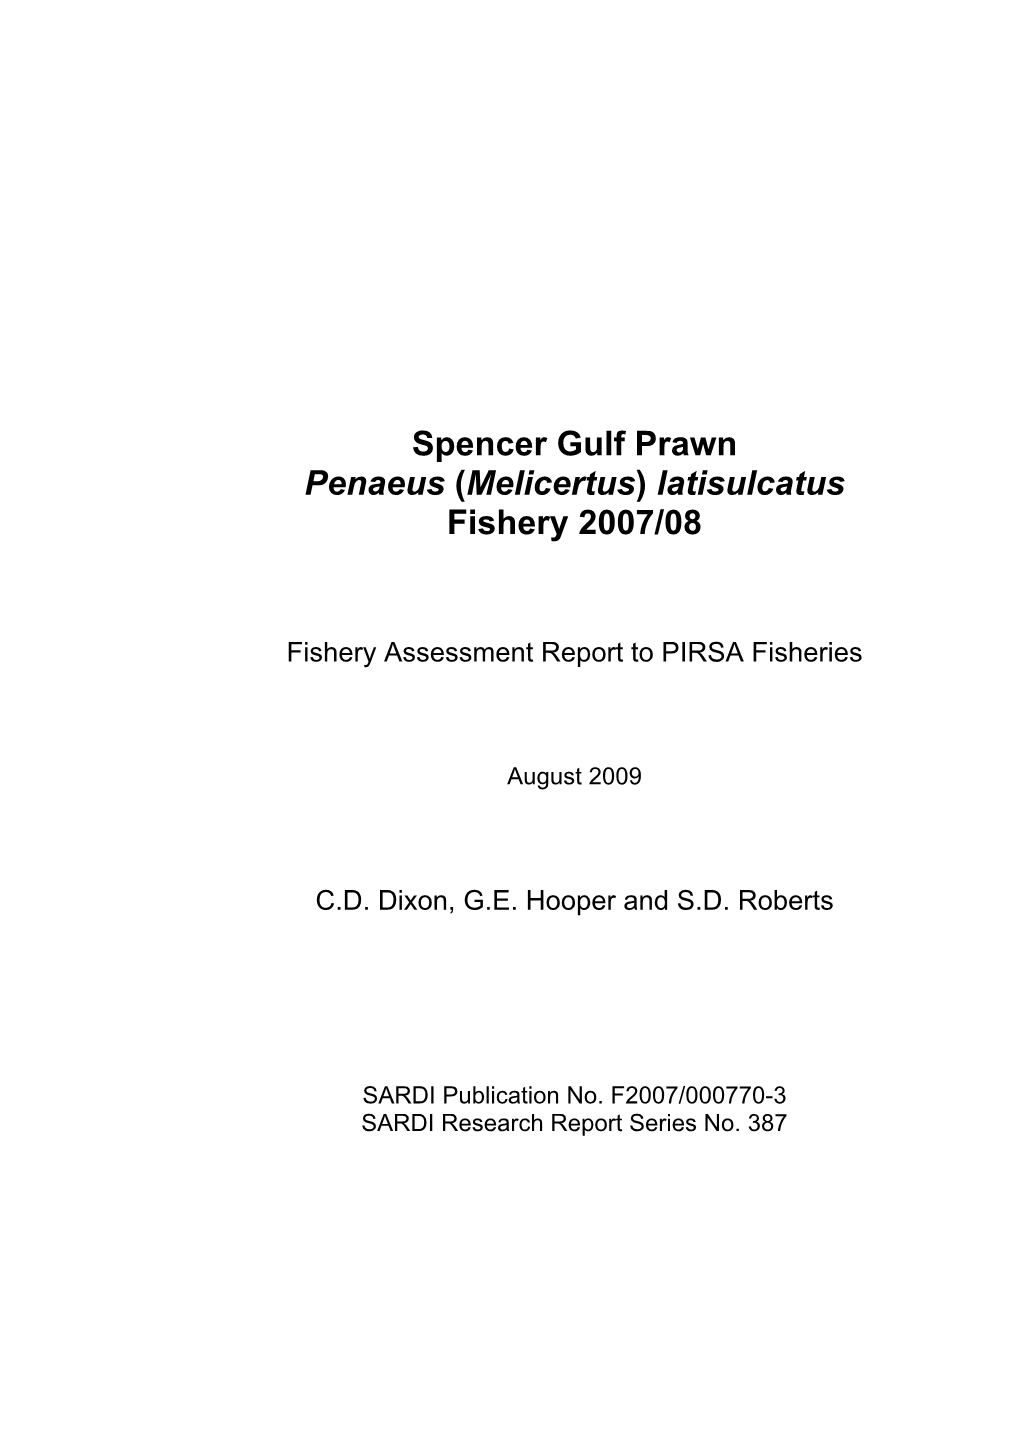 Spencer Gulf Prawn (Melicertus Latisulcatus) Fishery